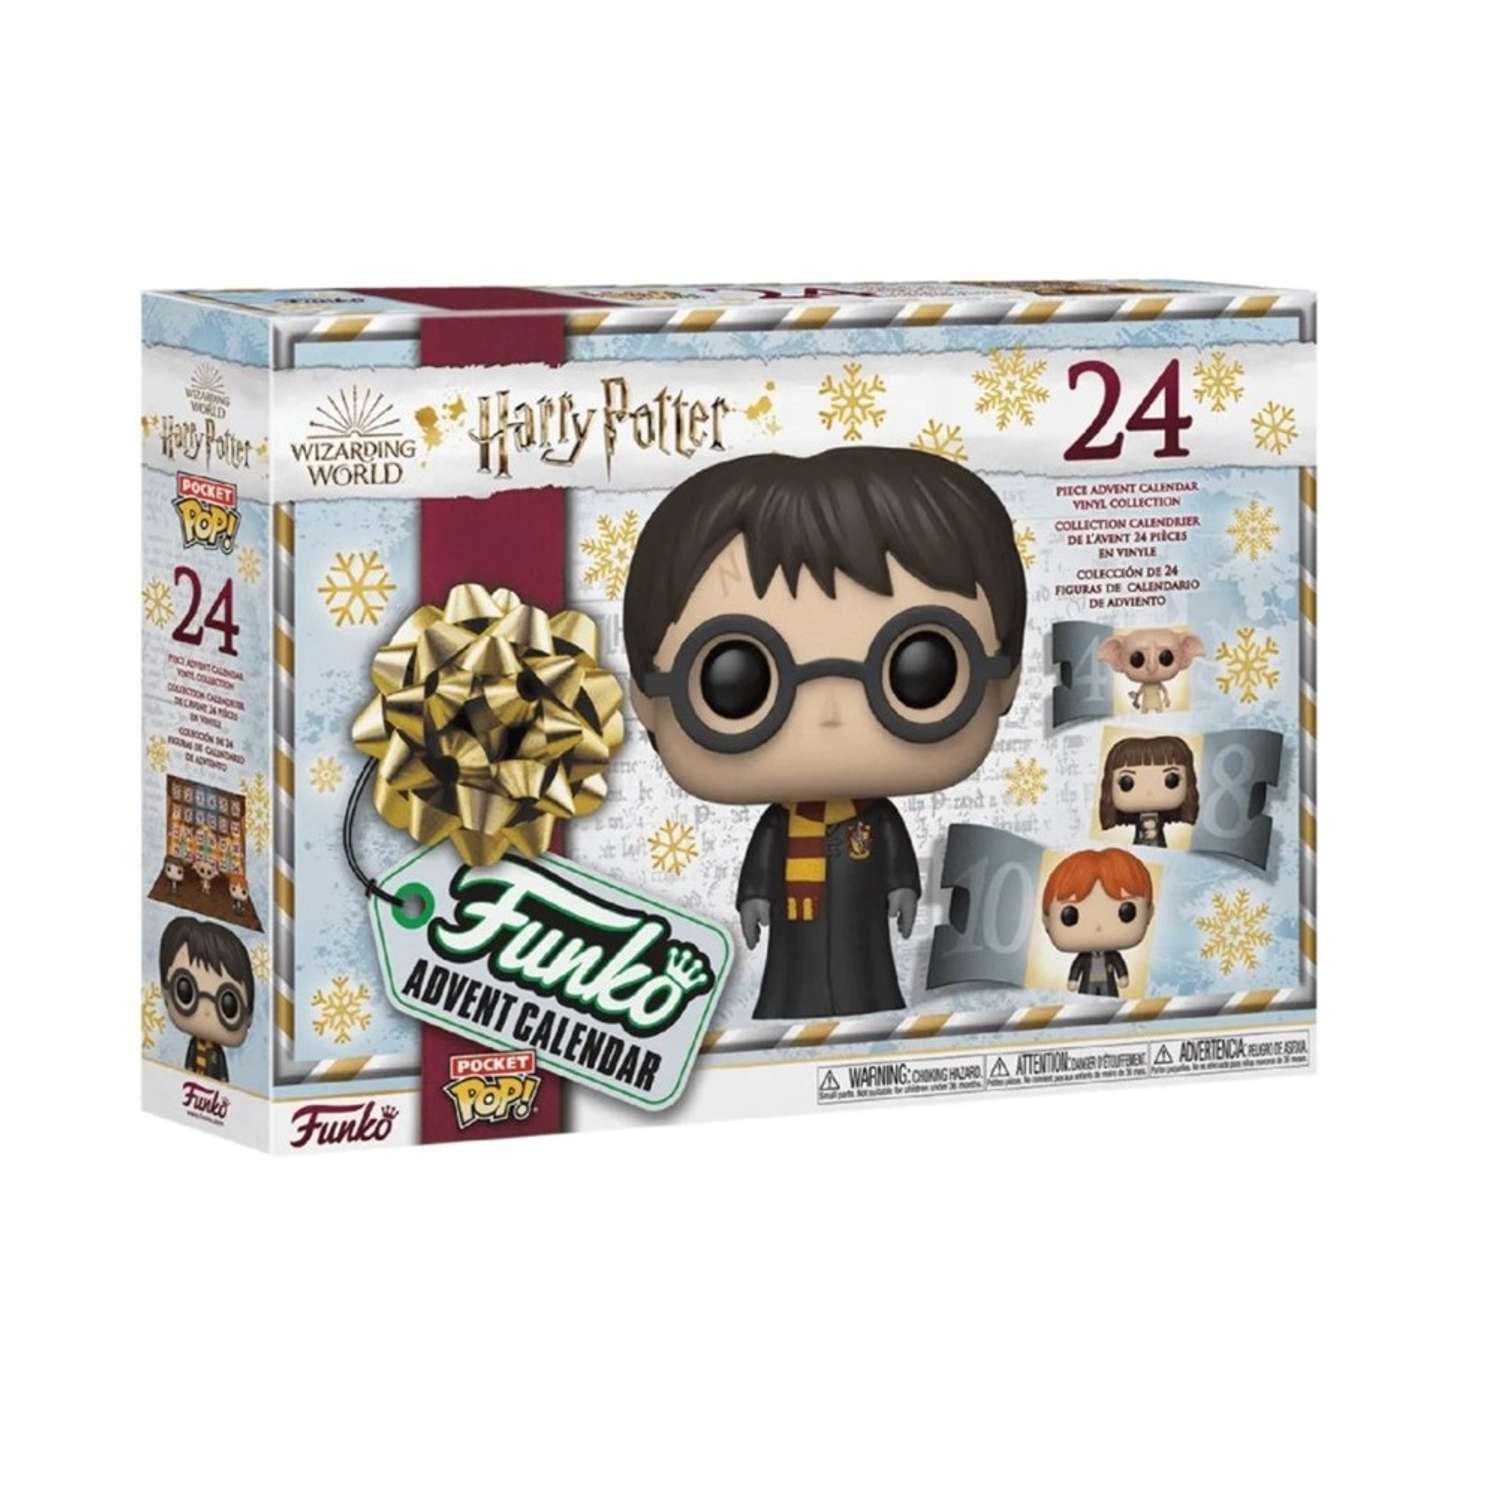 Адвент Календарь Funko Harry Potter (24 фигурки) Гарри Поттер. Funko Advent Calendar - фото 1